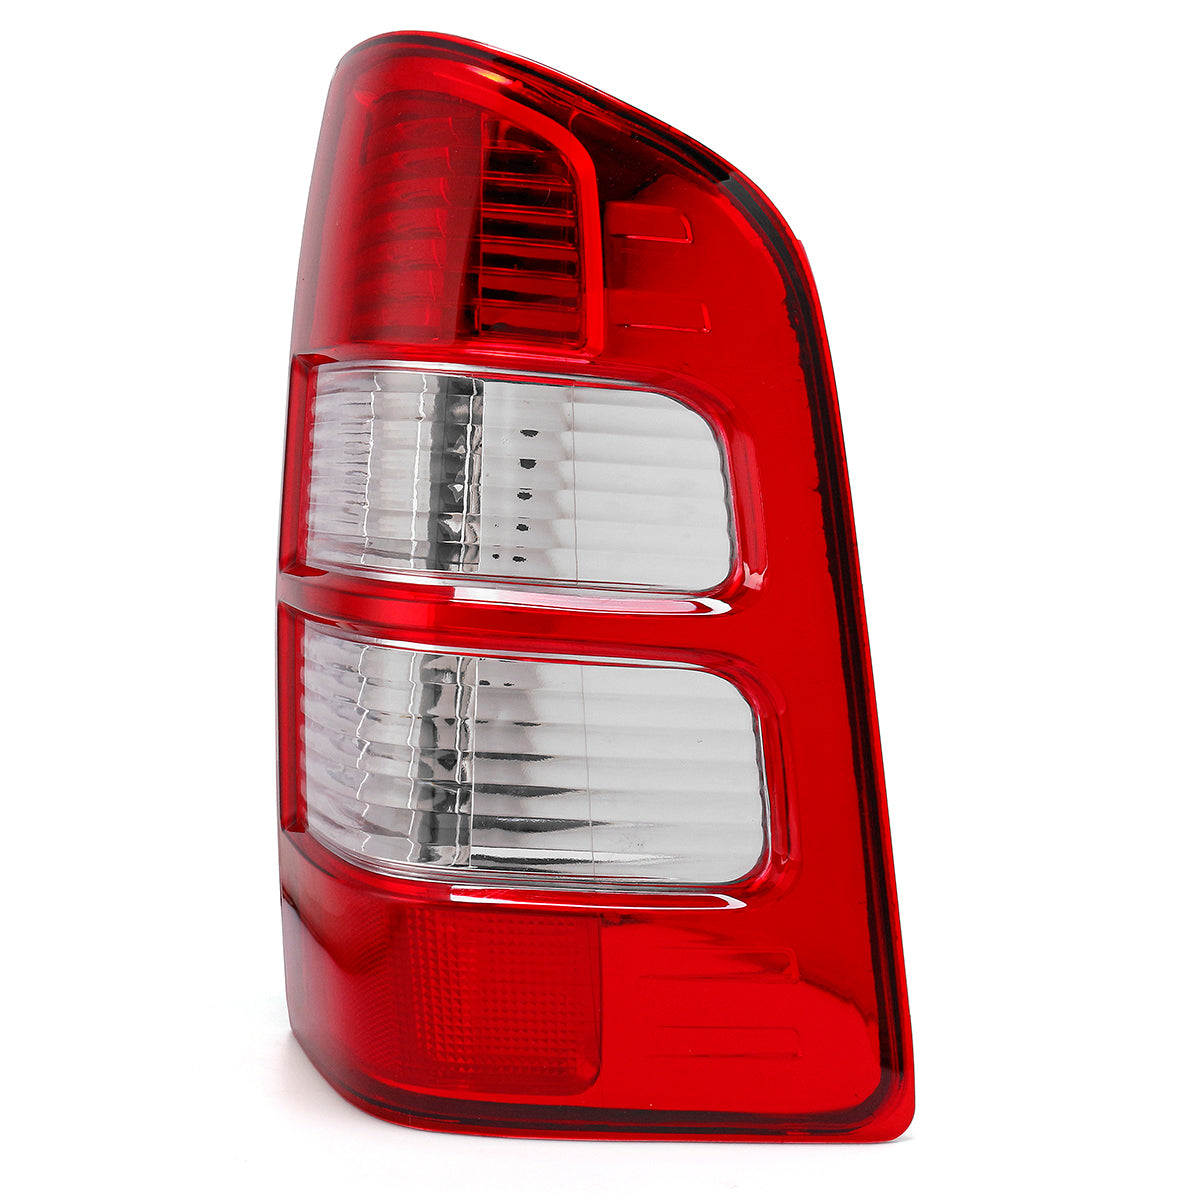 Dark Red Car Right Rear Tail Light Assembly Brake Lamp with Bulbs for Ford Ranger Thunder Pickup Truck 2006-2011